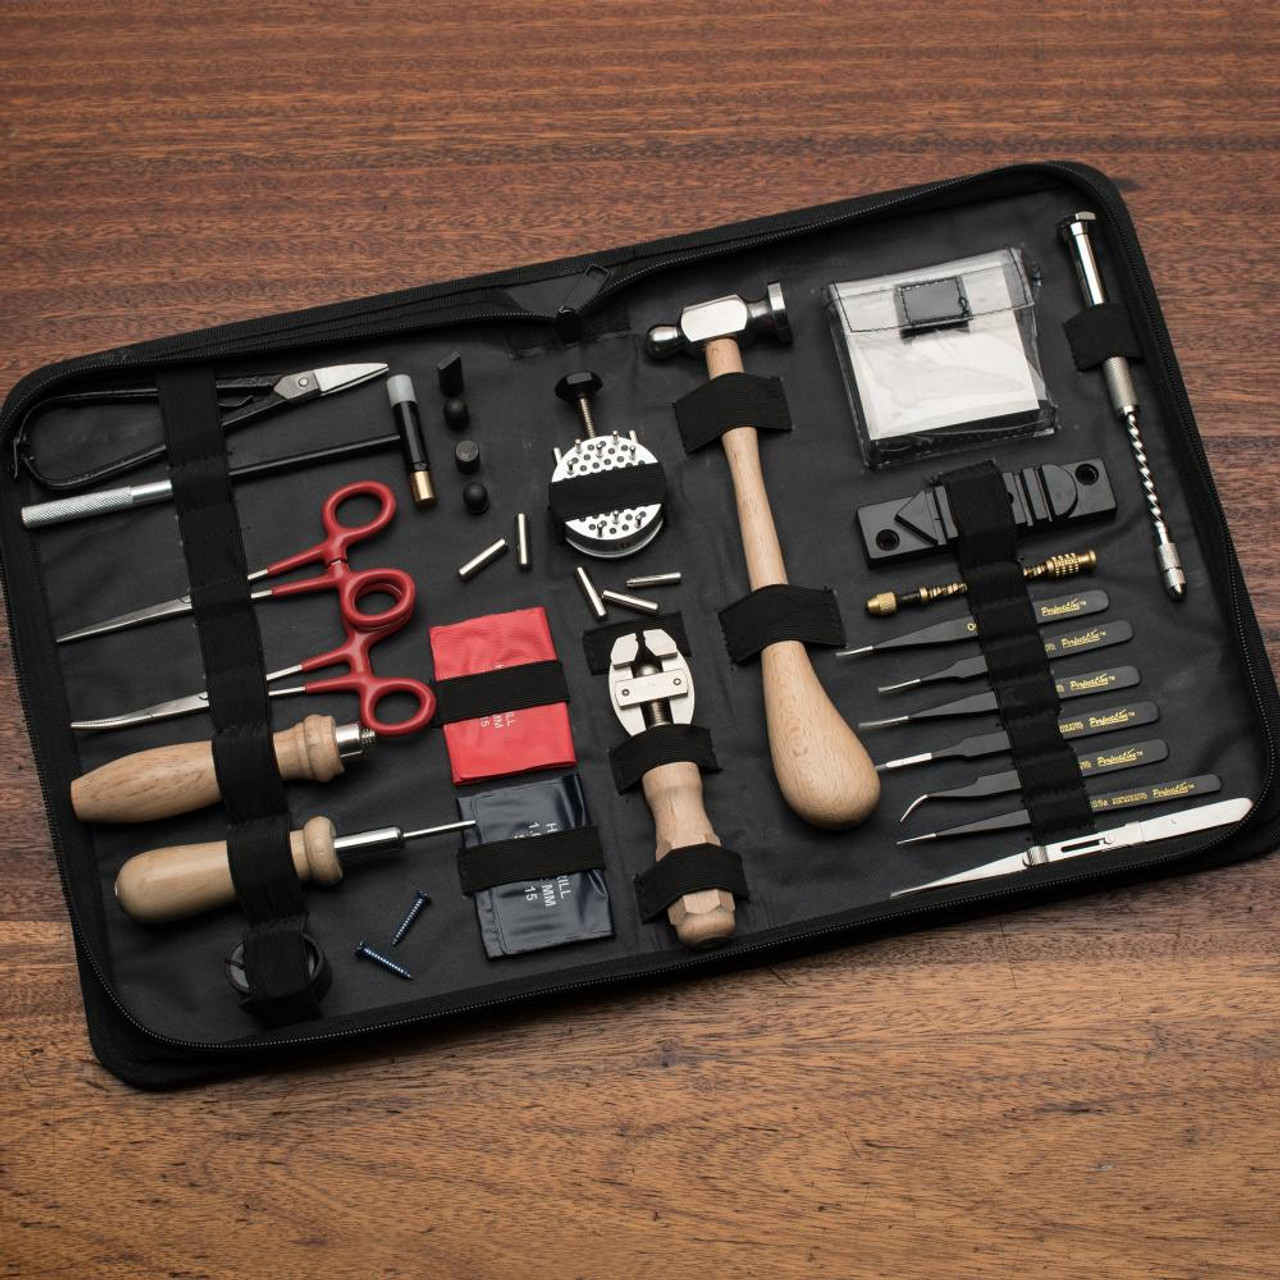 Master-Select Crafts Tool Kit